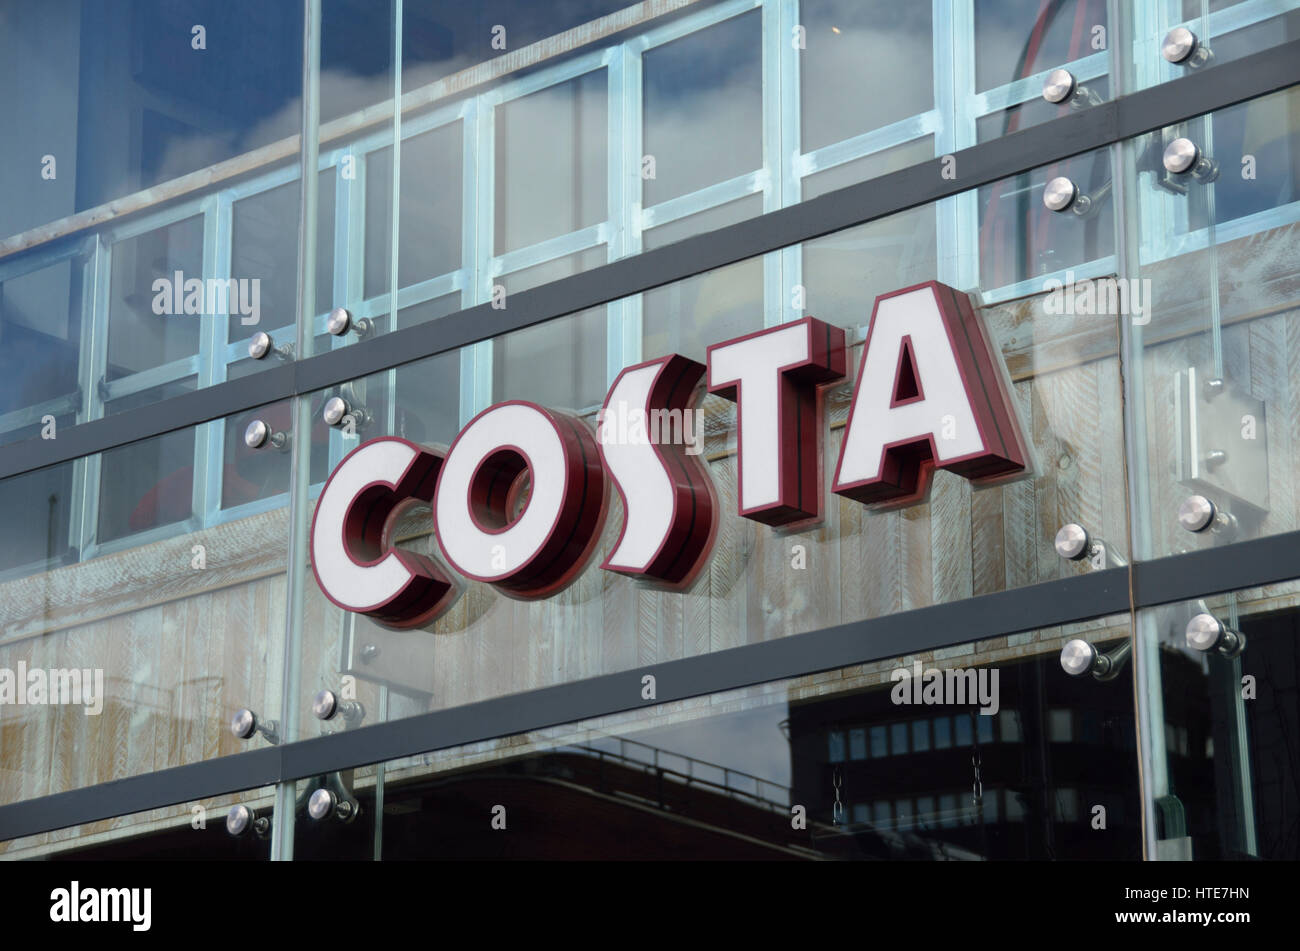 Costa cafe sign logo. Stock Photo